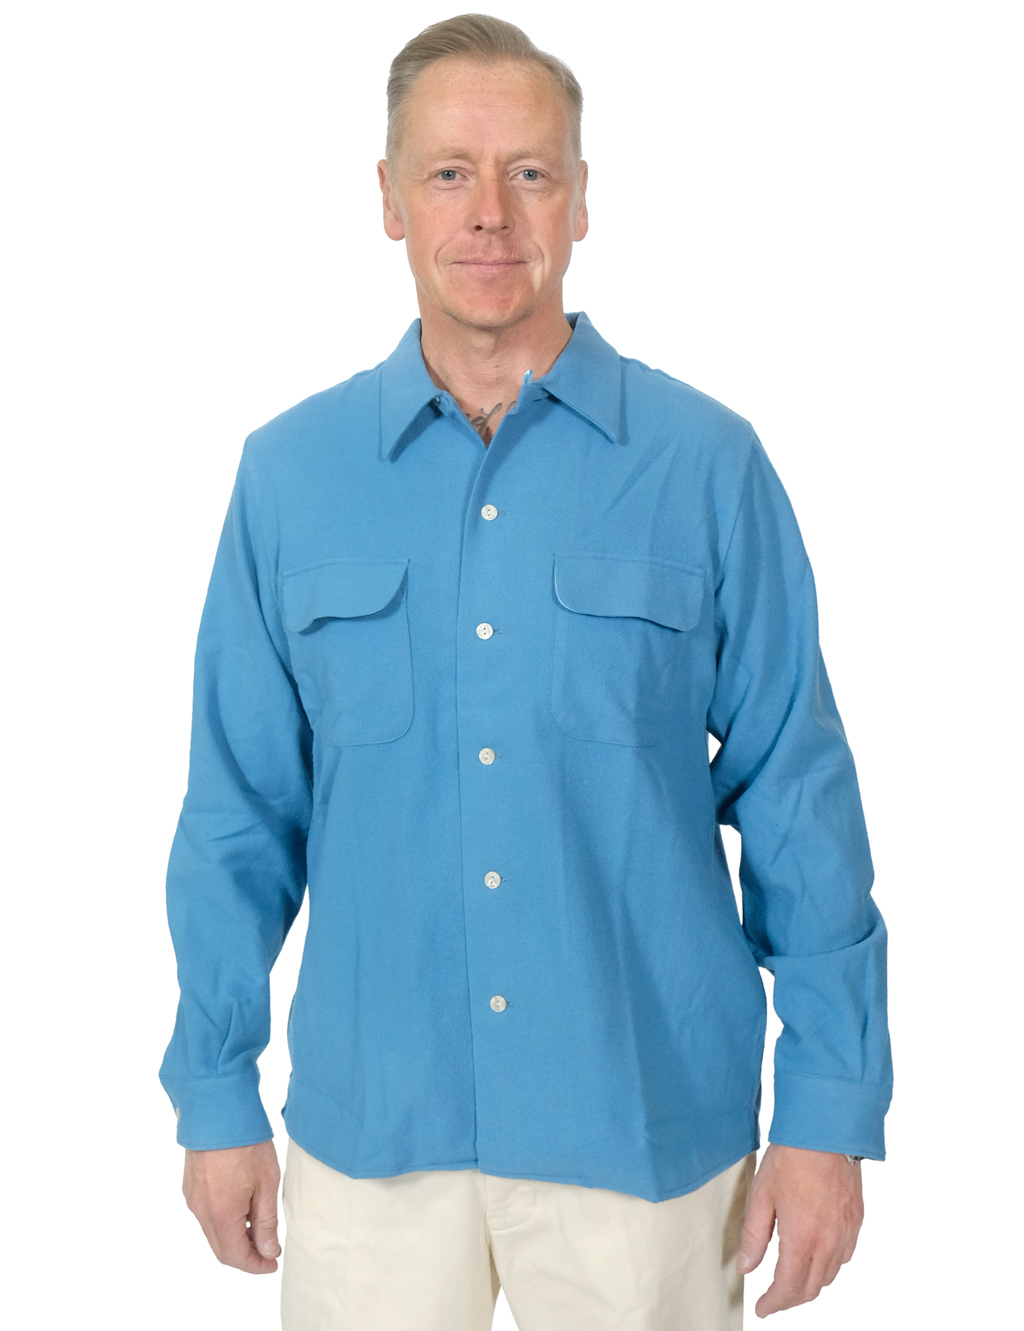 Levis Vintage Clothing - Levis® Vintage Styled by Levis Shirt - Blue Storm